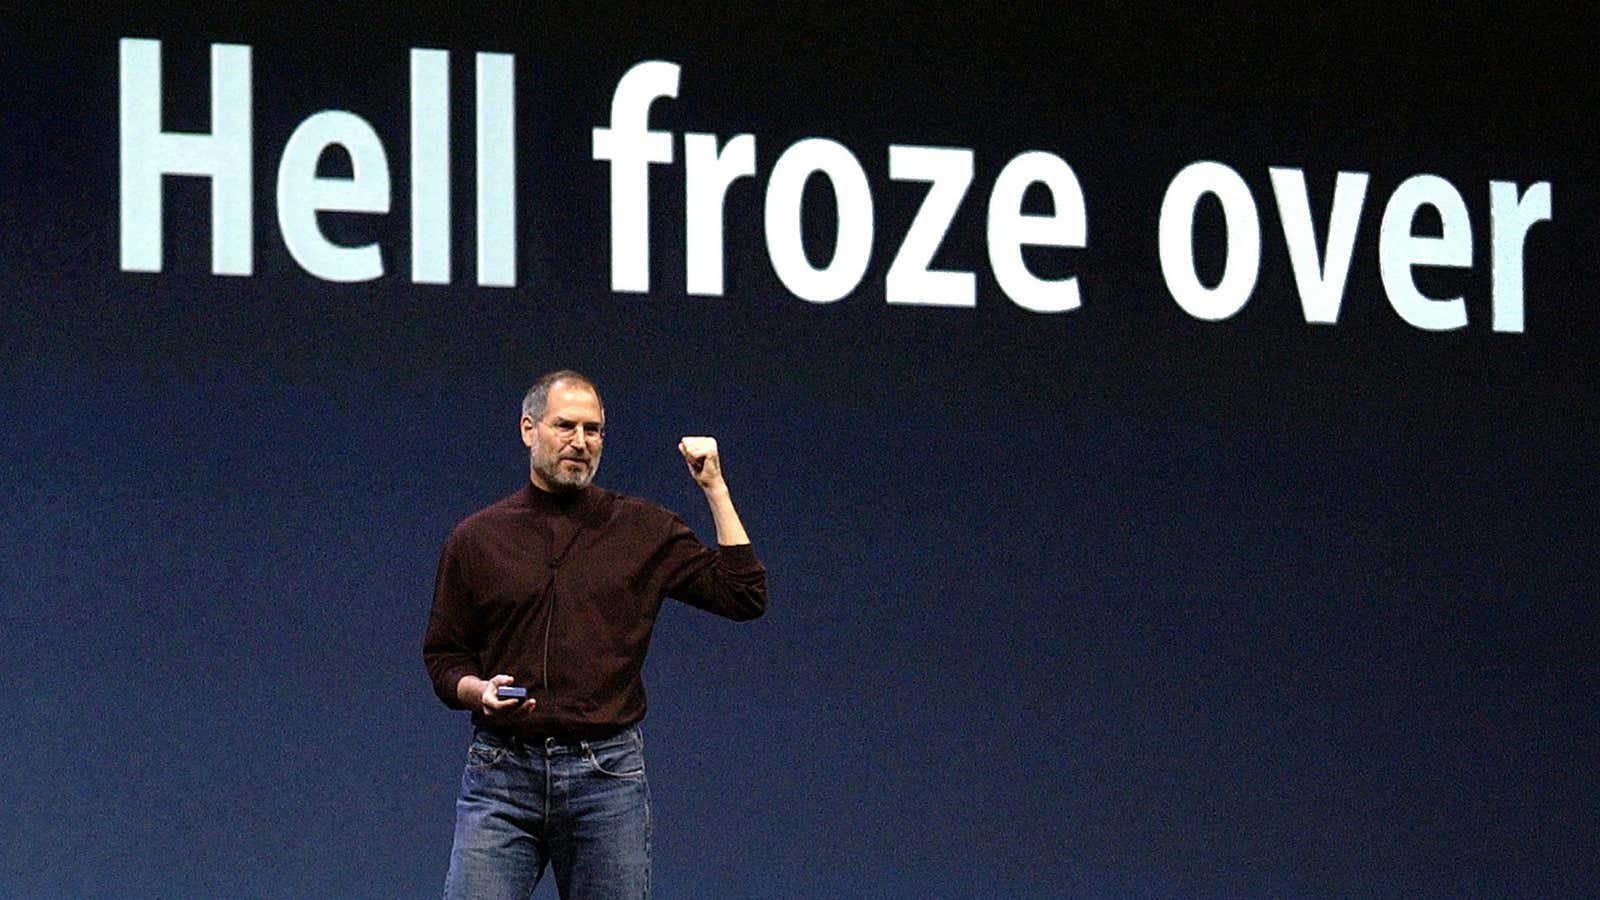 Steve Jobs was wrong.